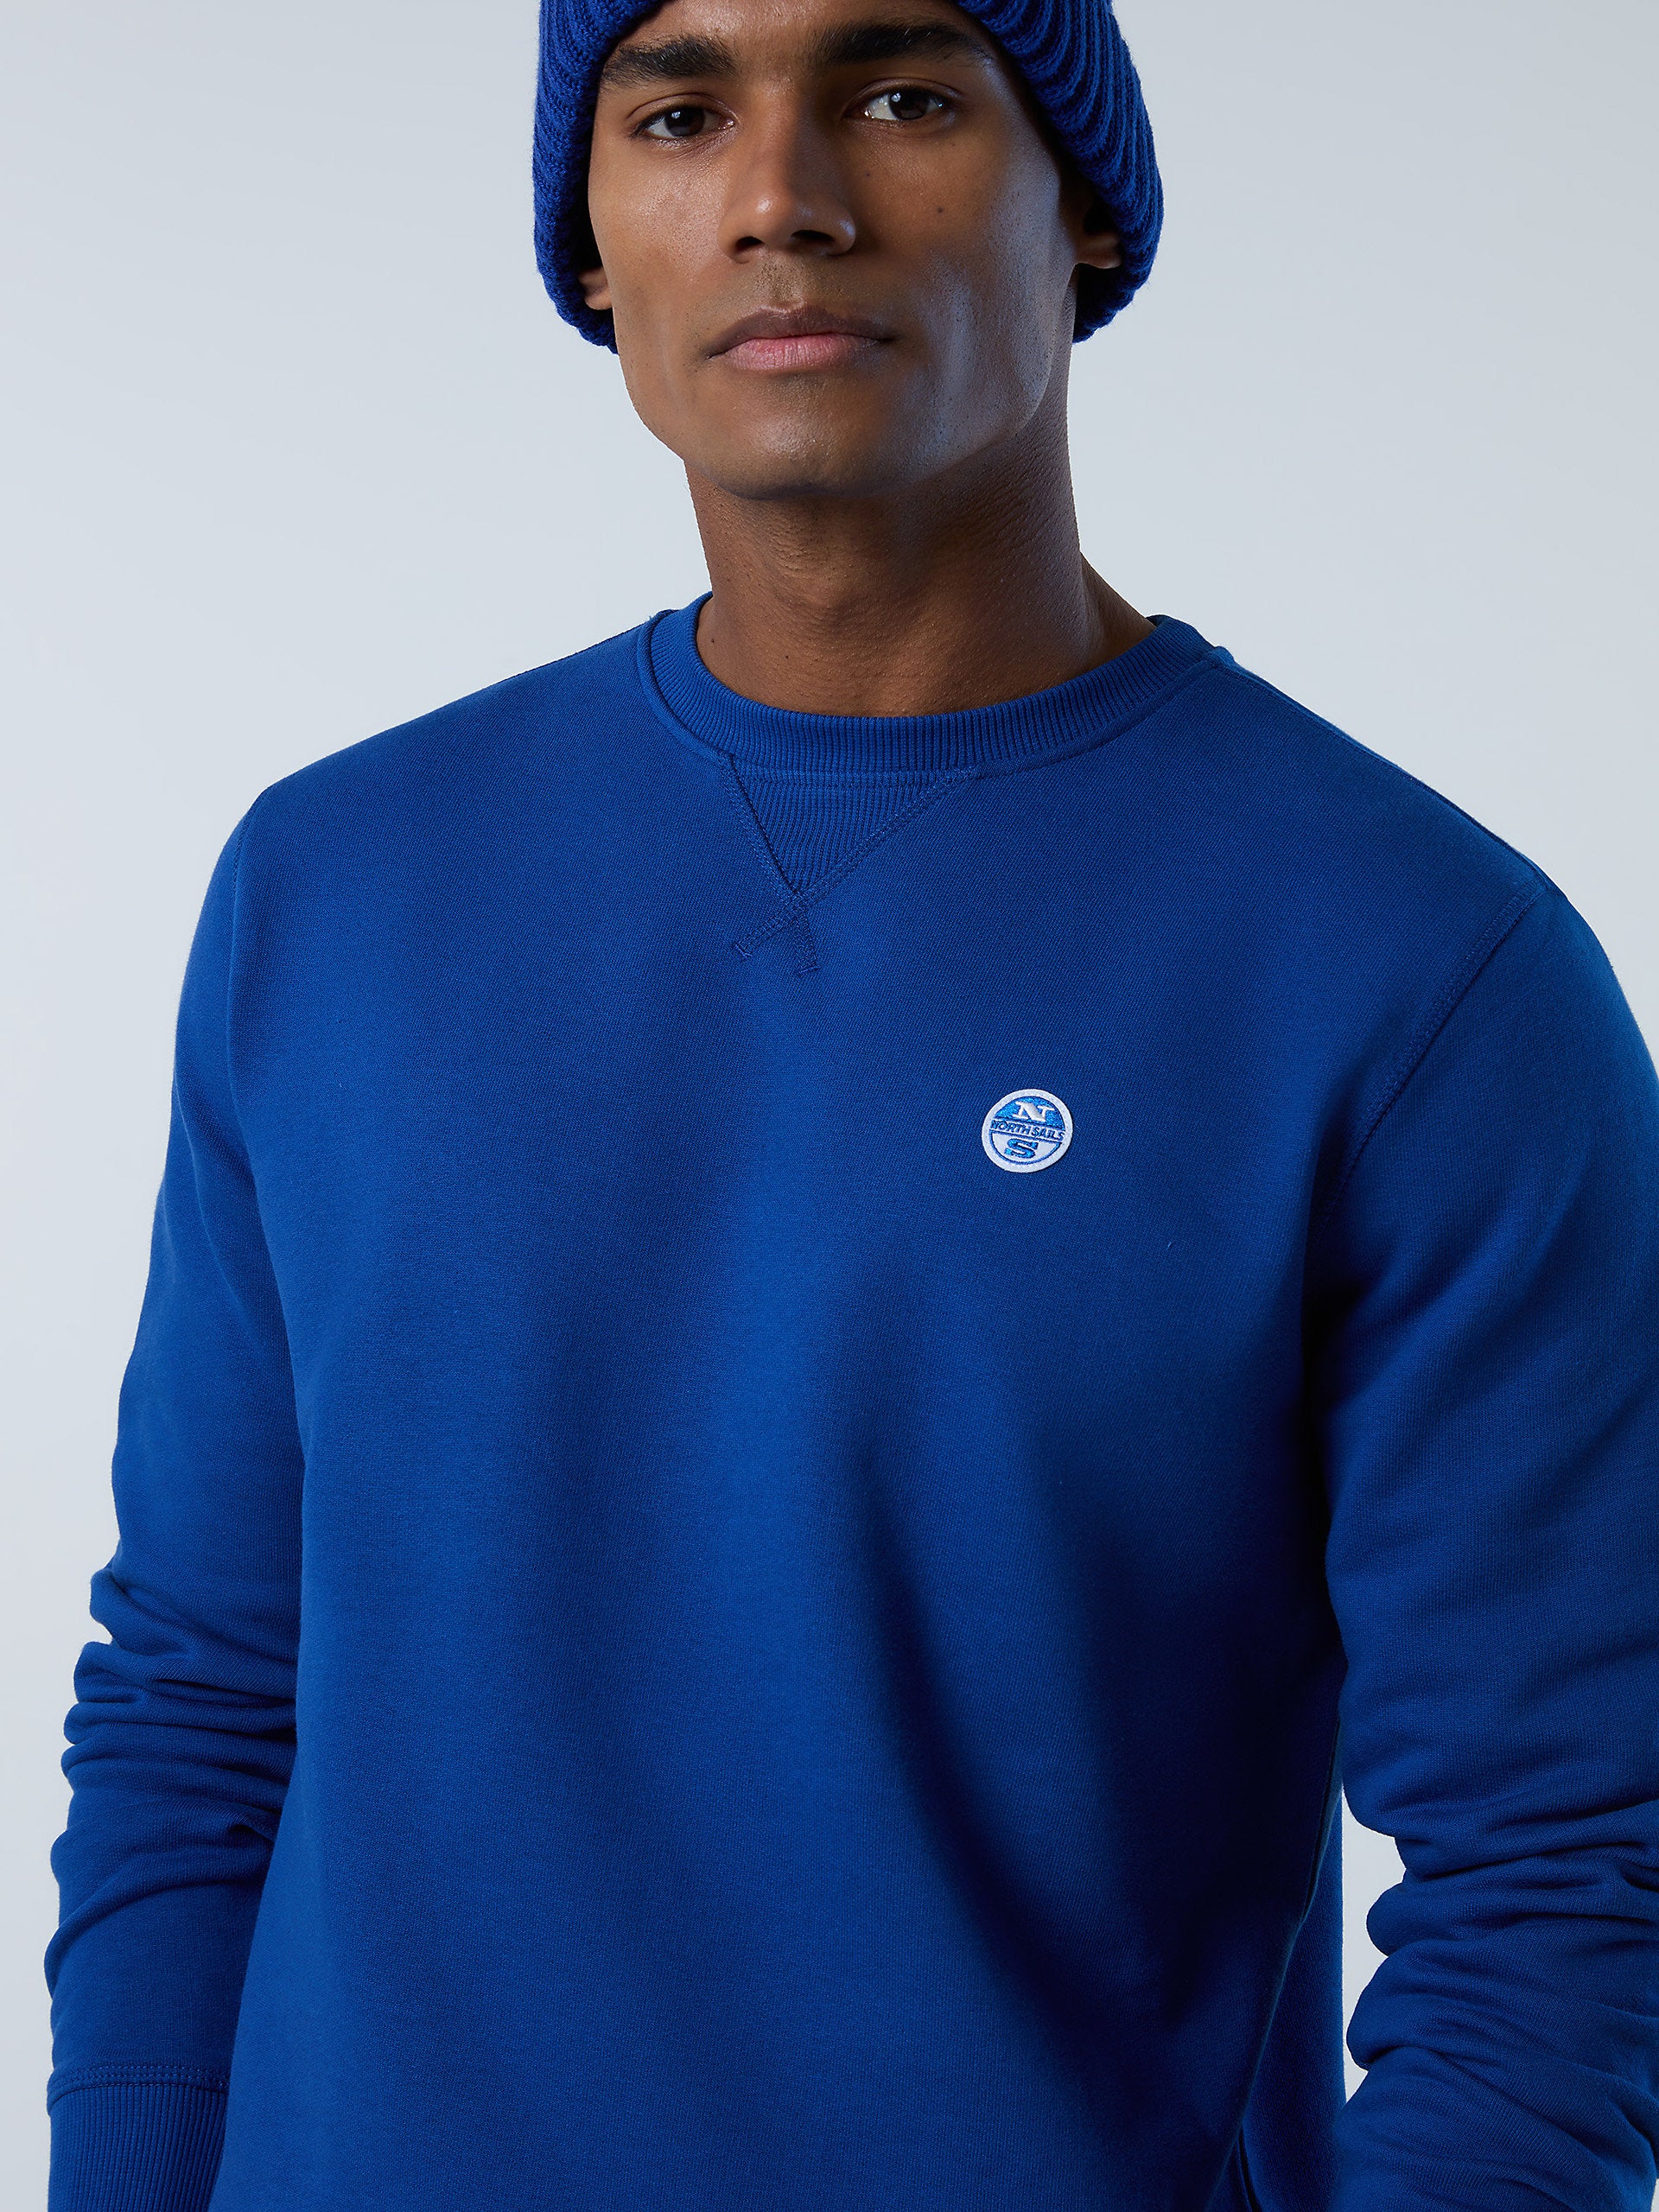 North Sails sweatshirt with logo ocean blue